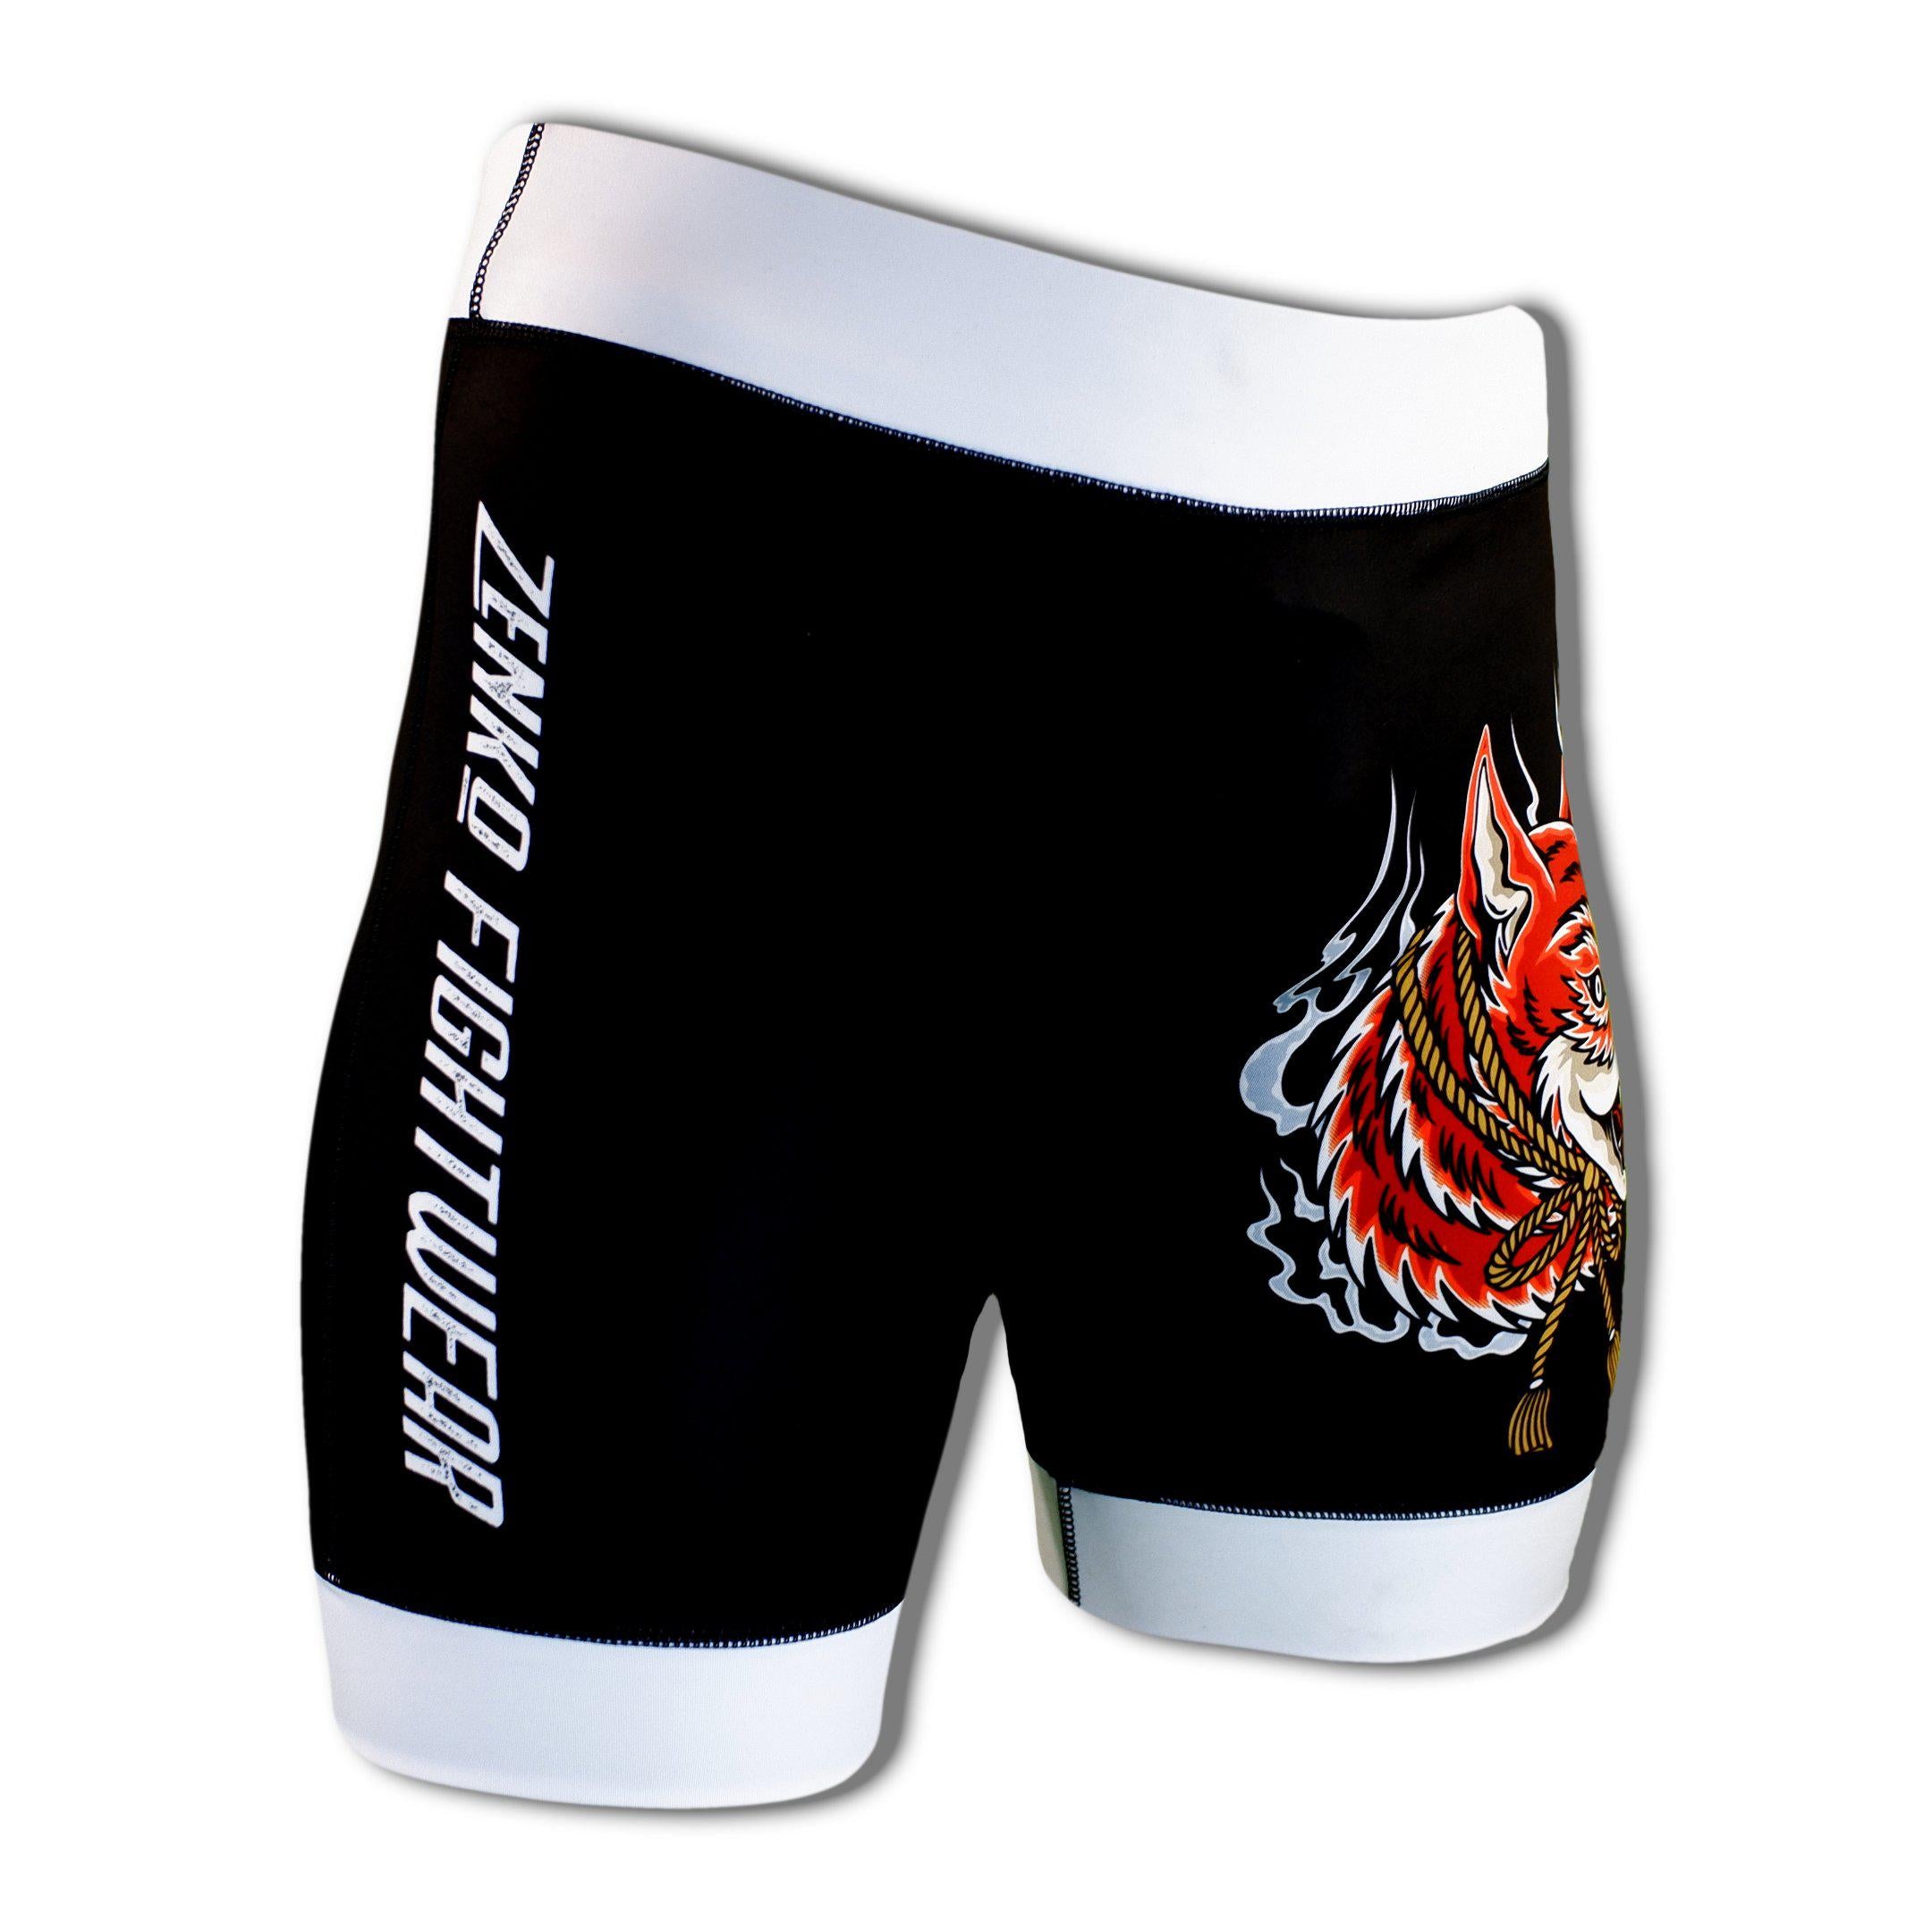 Kitsune Vale Tudo Shorts - Zenko Fightwear